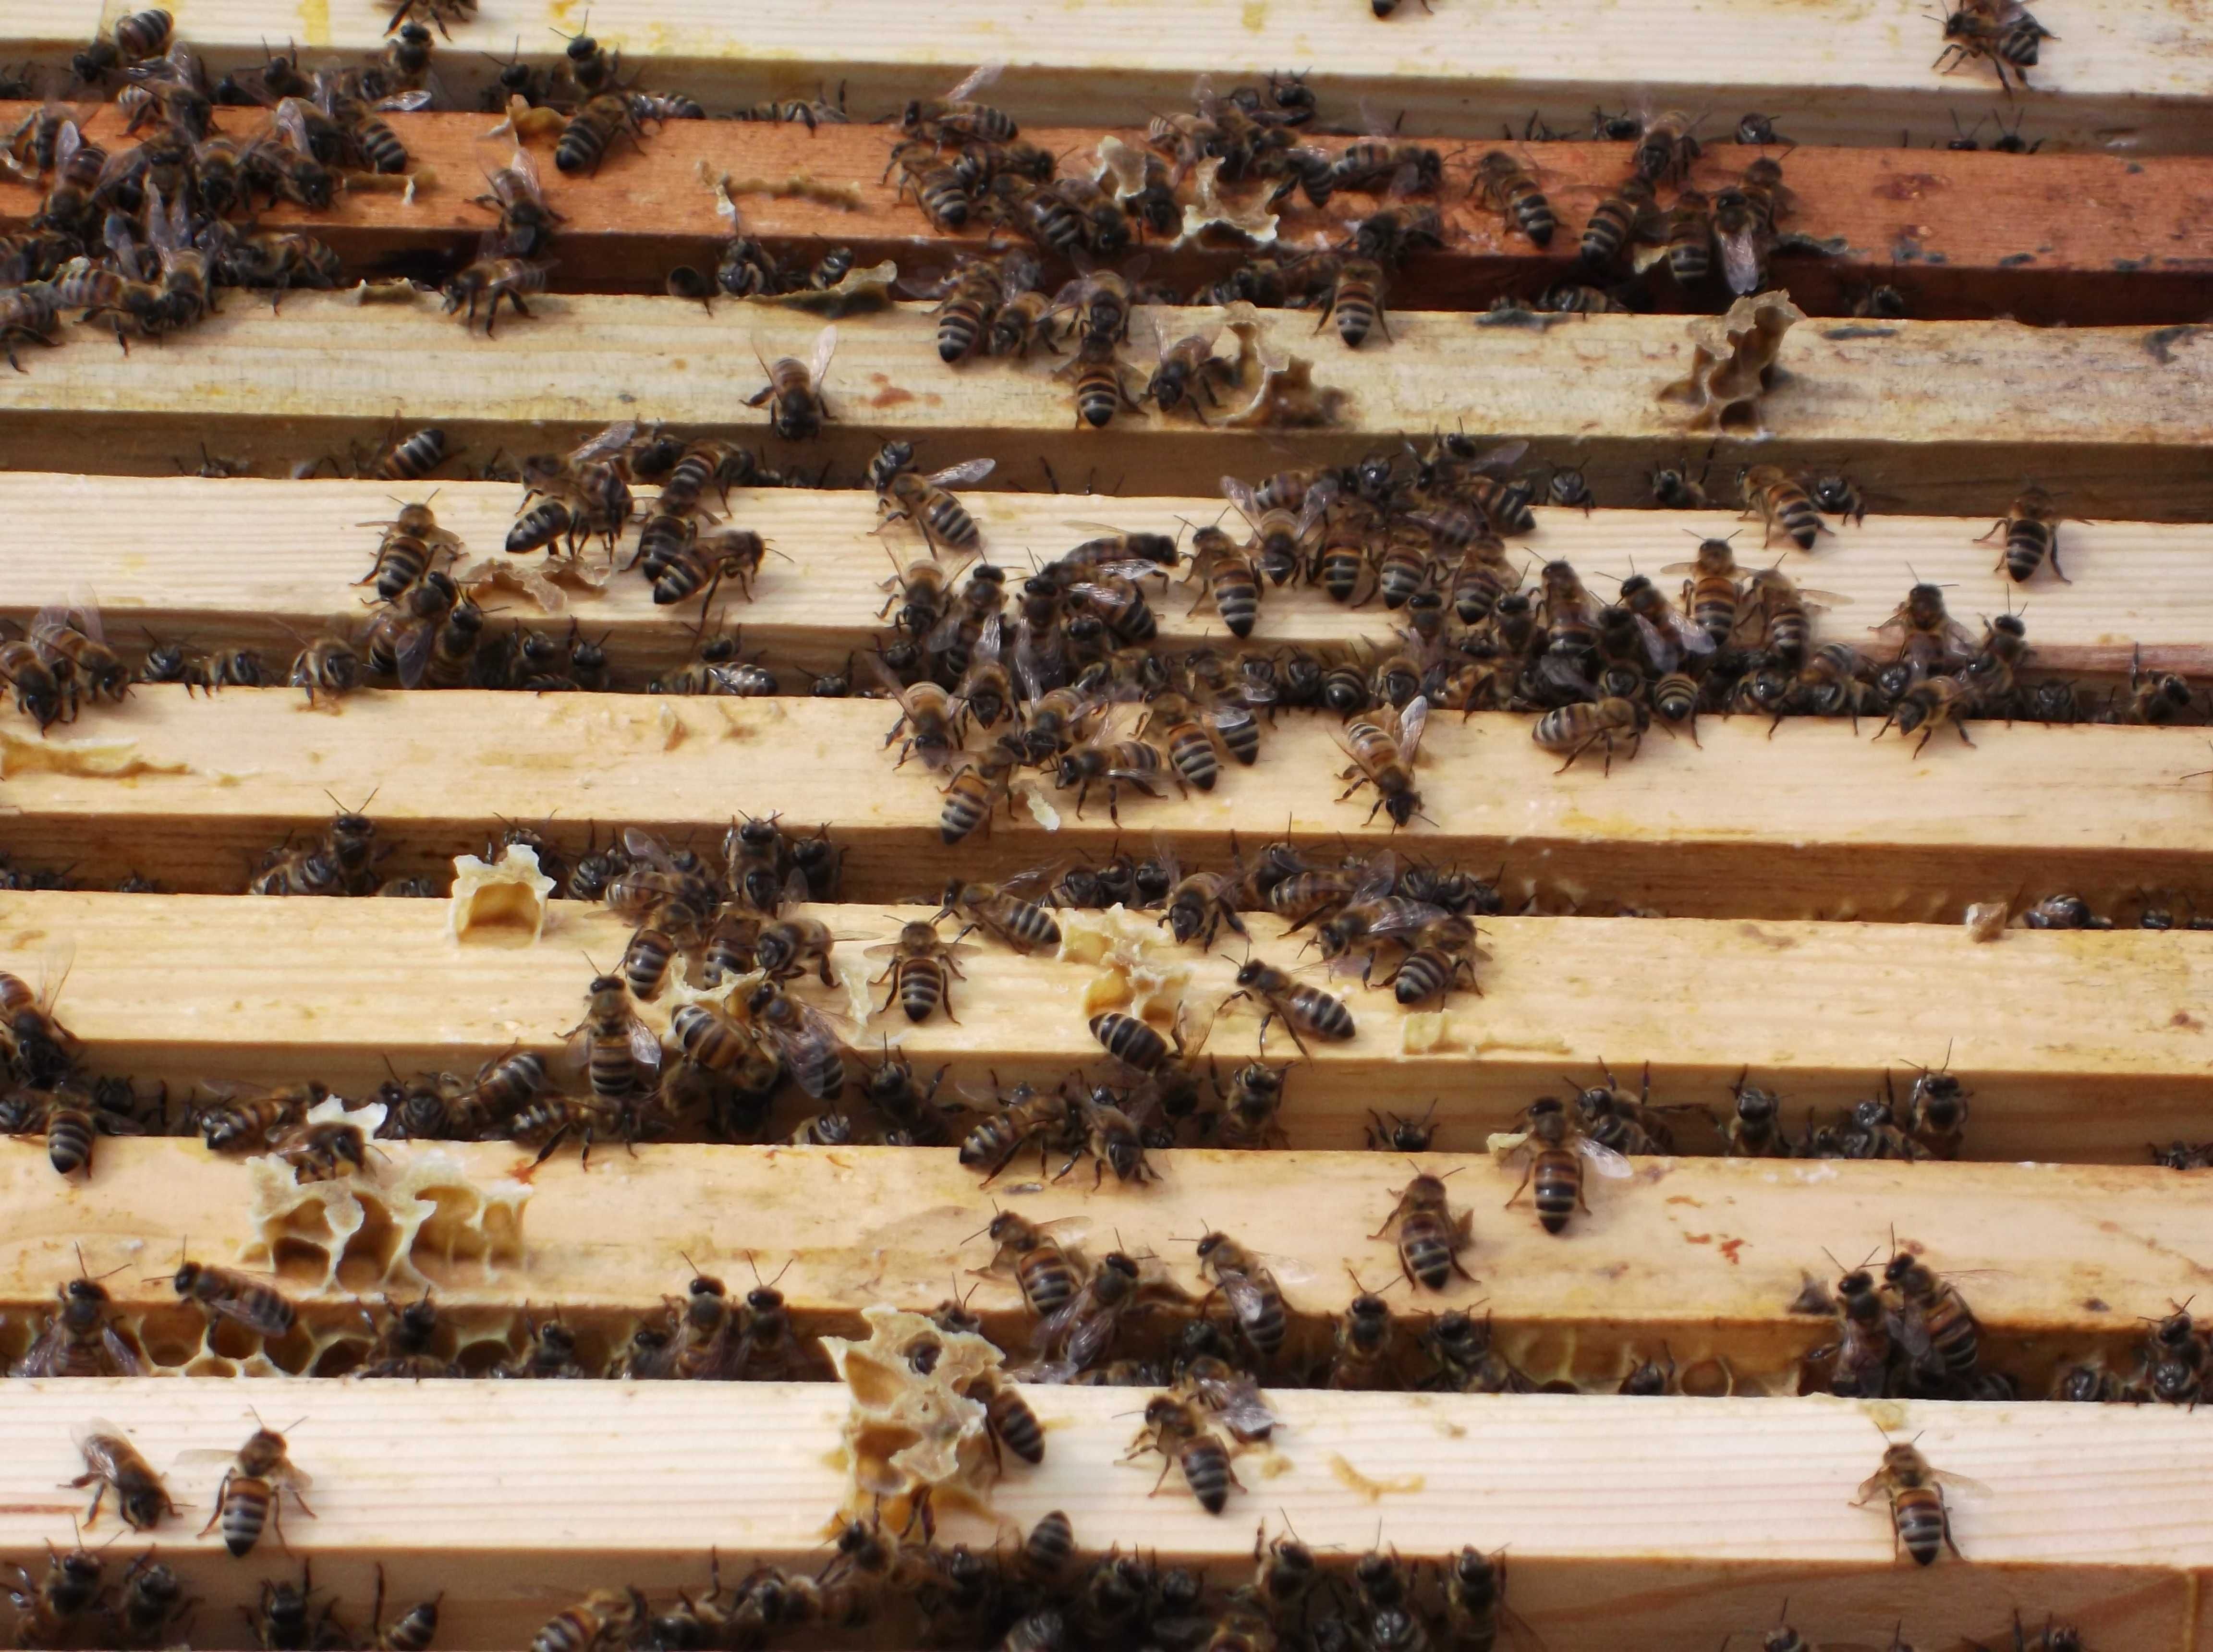 Пчелопакеты ,пчелосемьи ,пчеломатки , Бакфаст